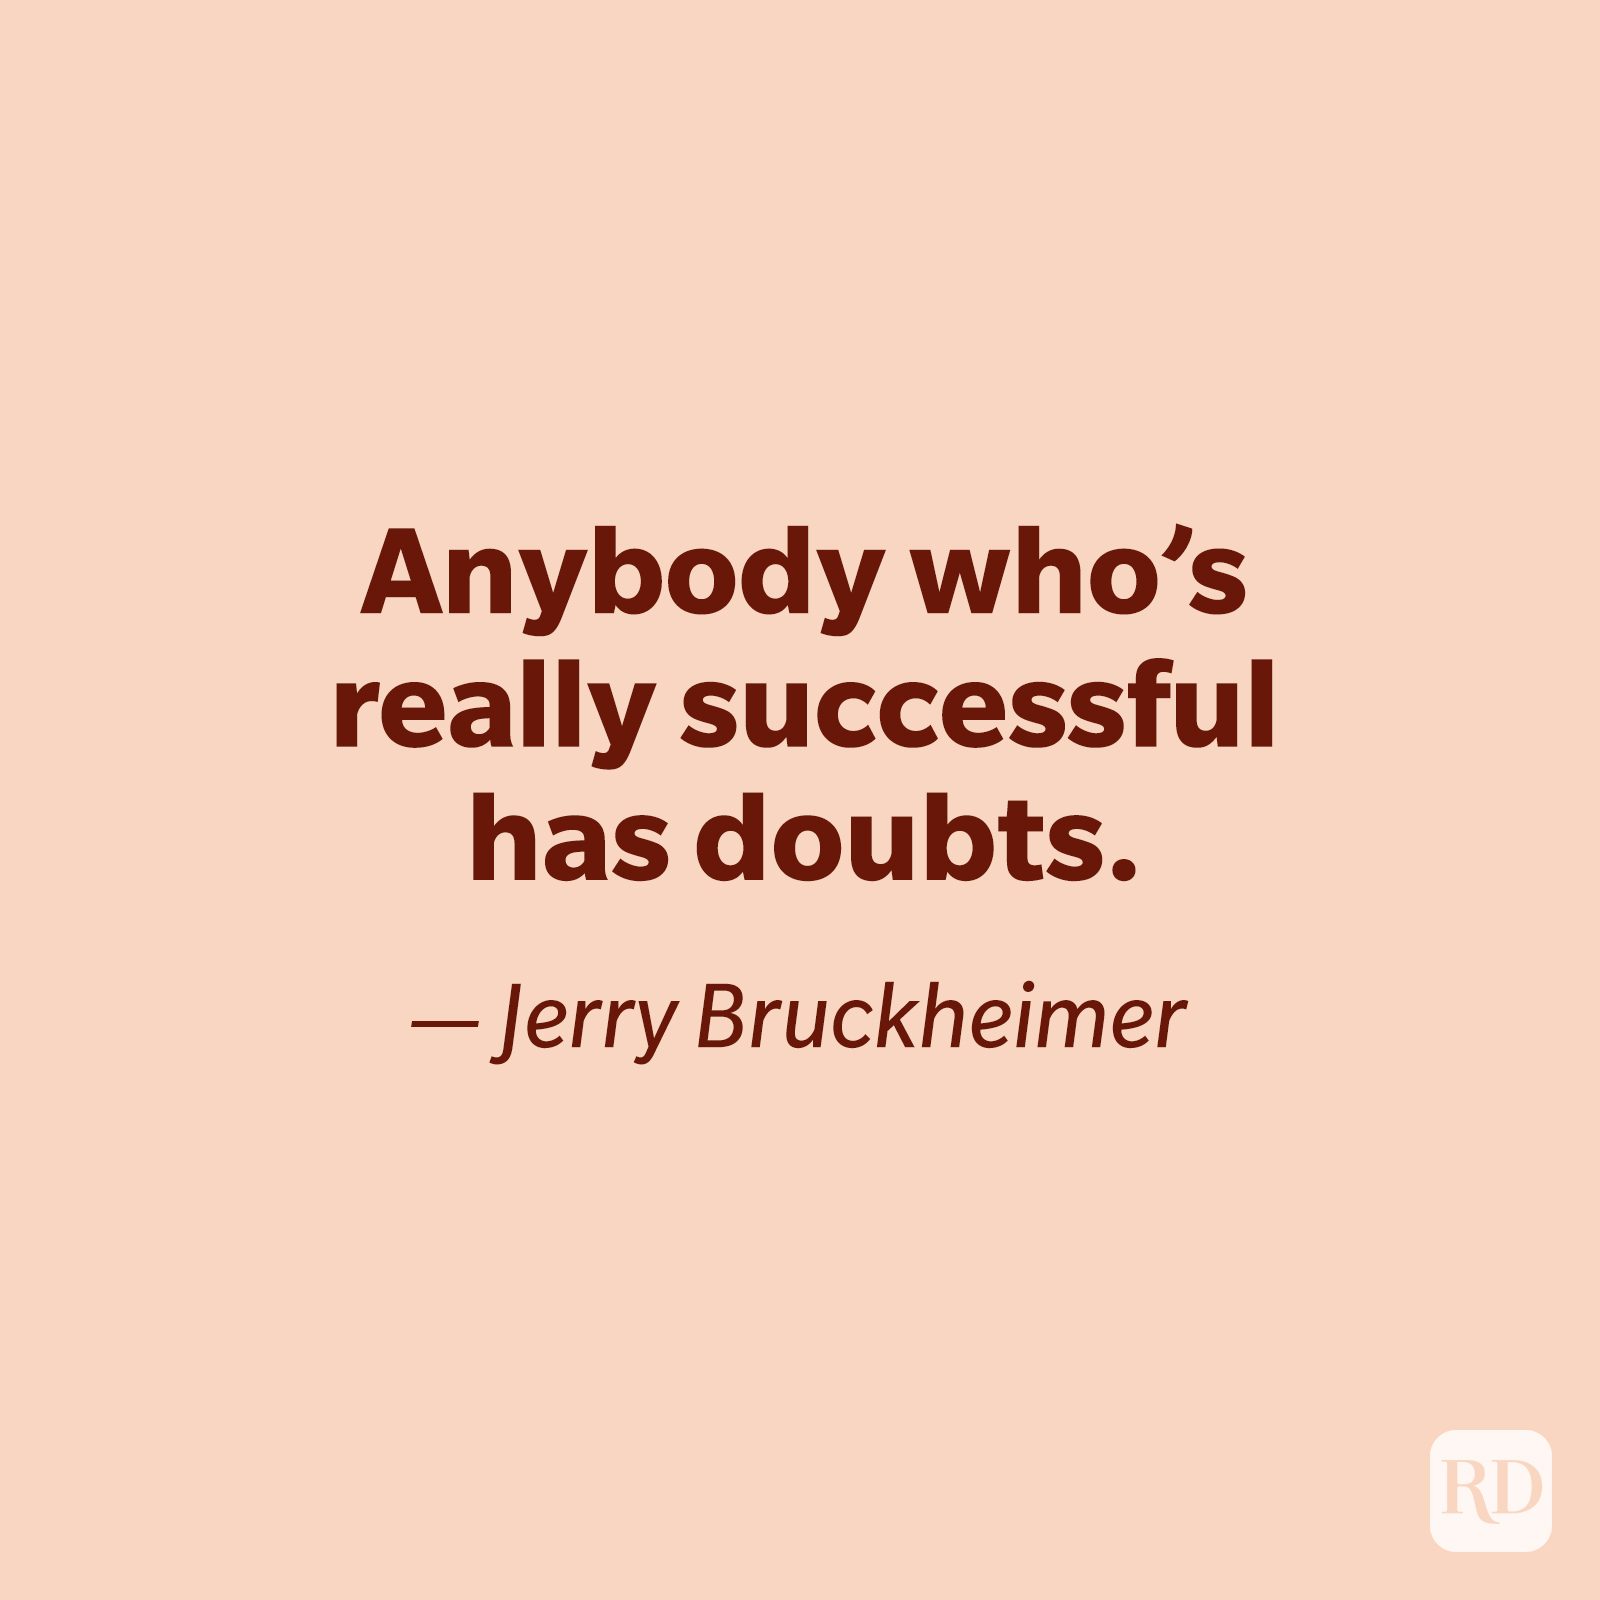 Jerry Bruckheimer quote